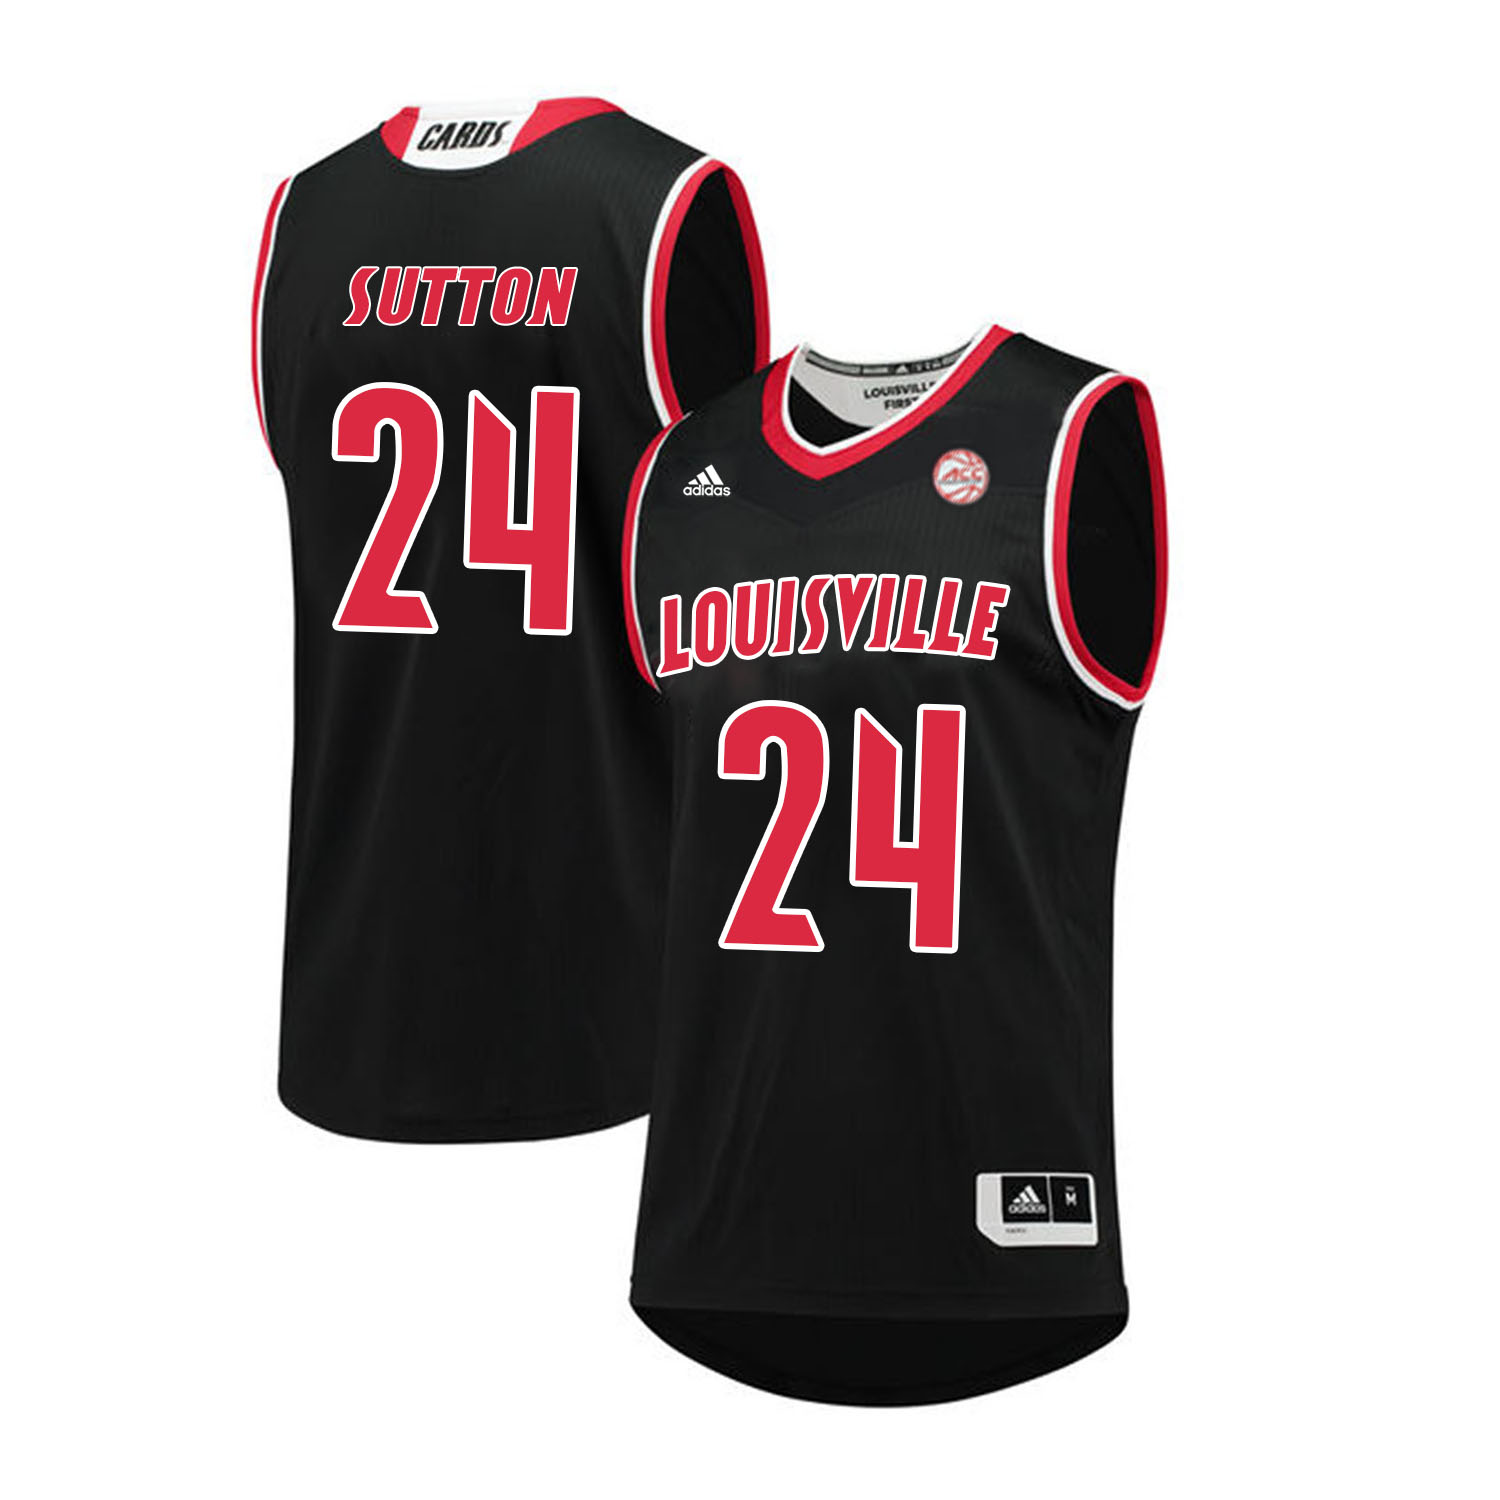 Louisville Cardinals 24 Dwayne Sutton Black College Basketball Jersey